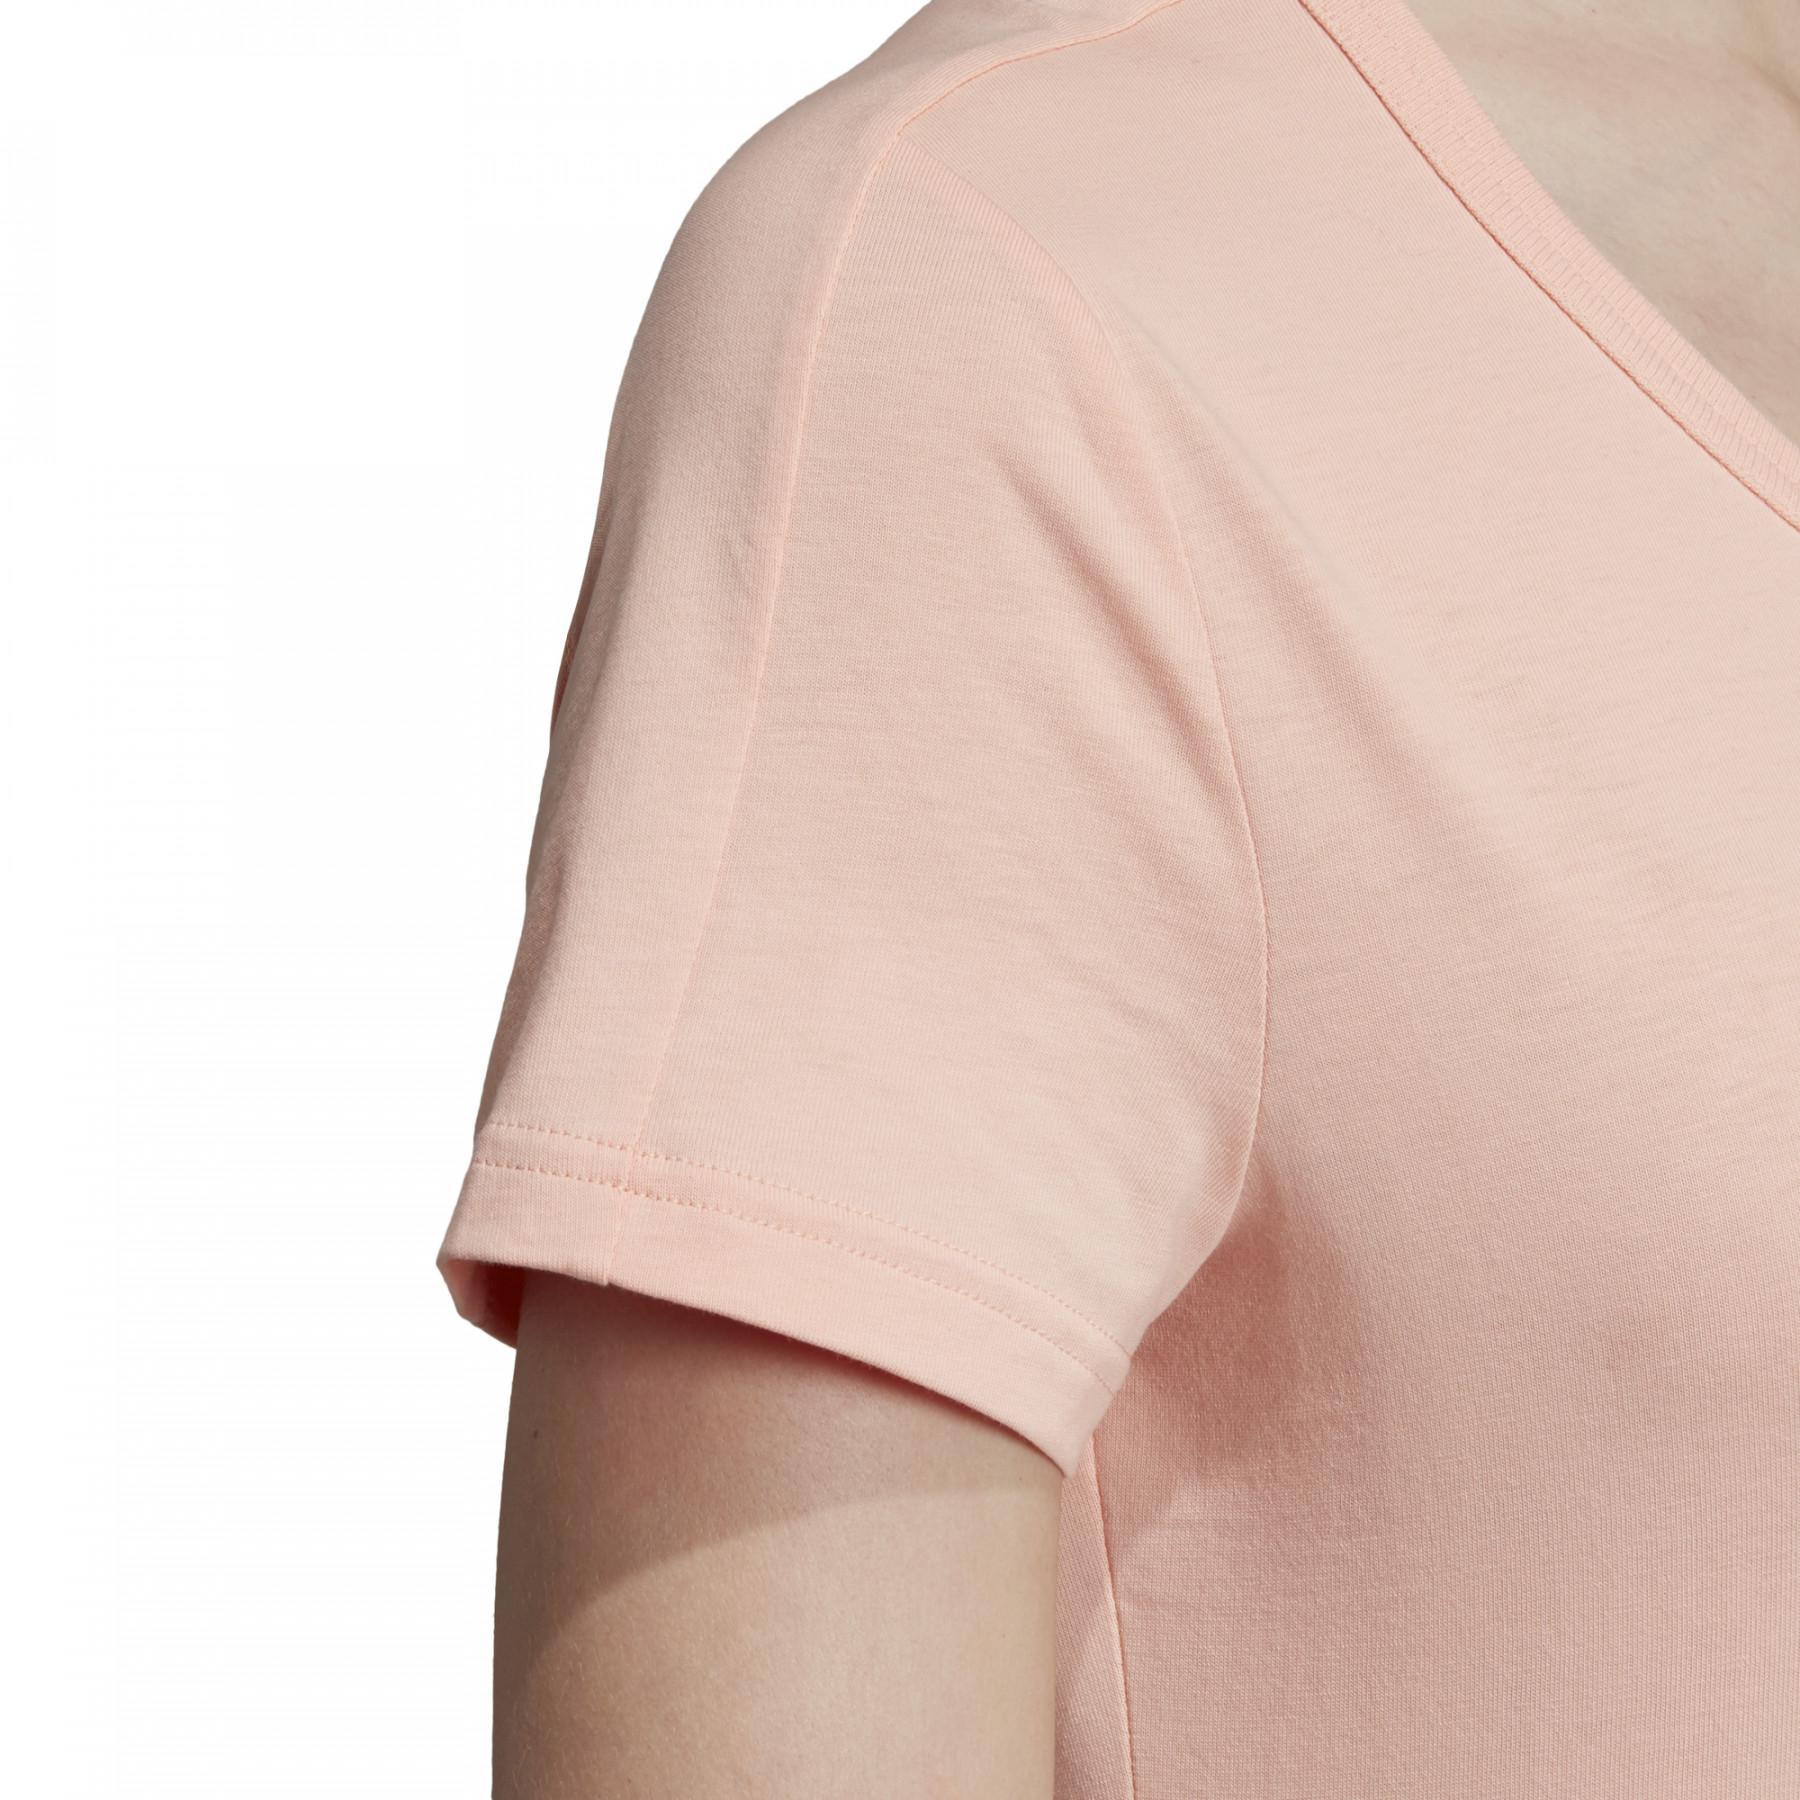 T-shirt femme adidas Brilliant Basics